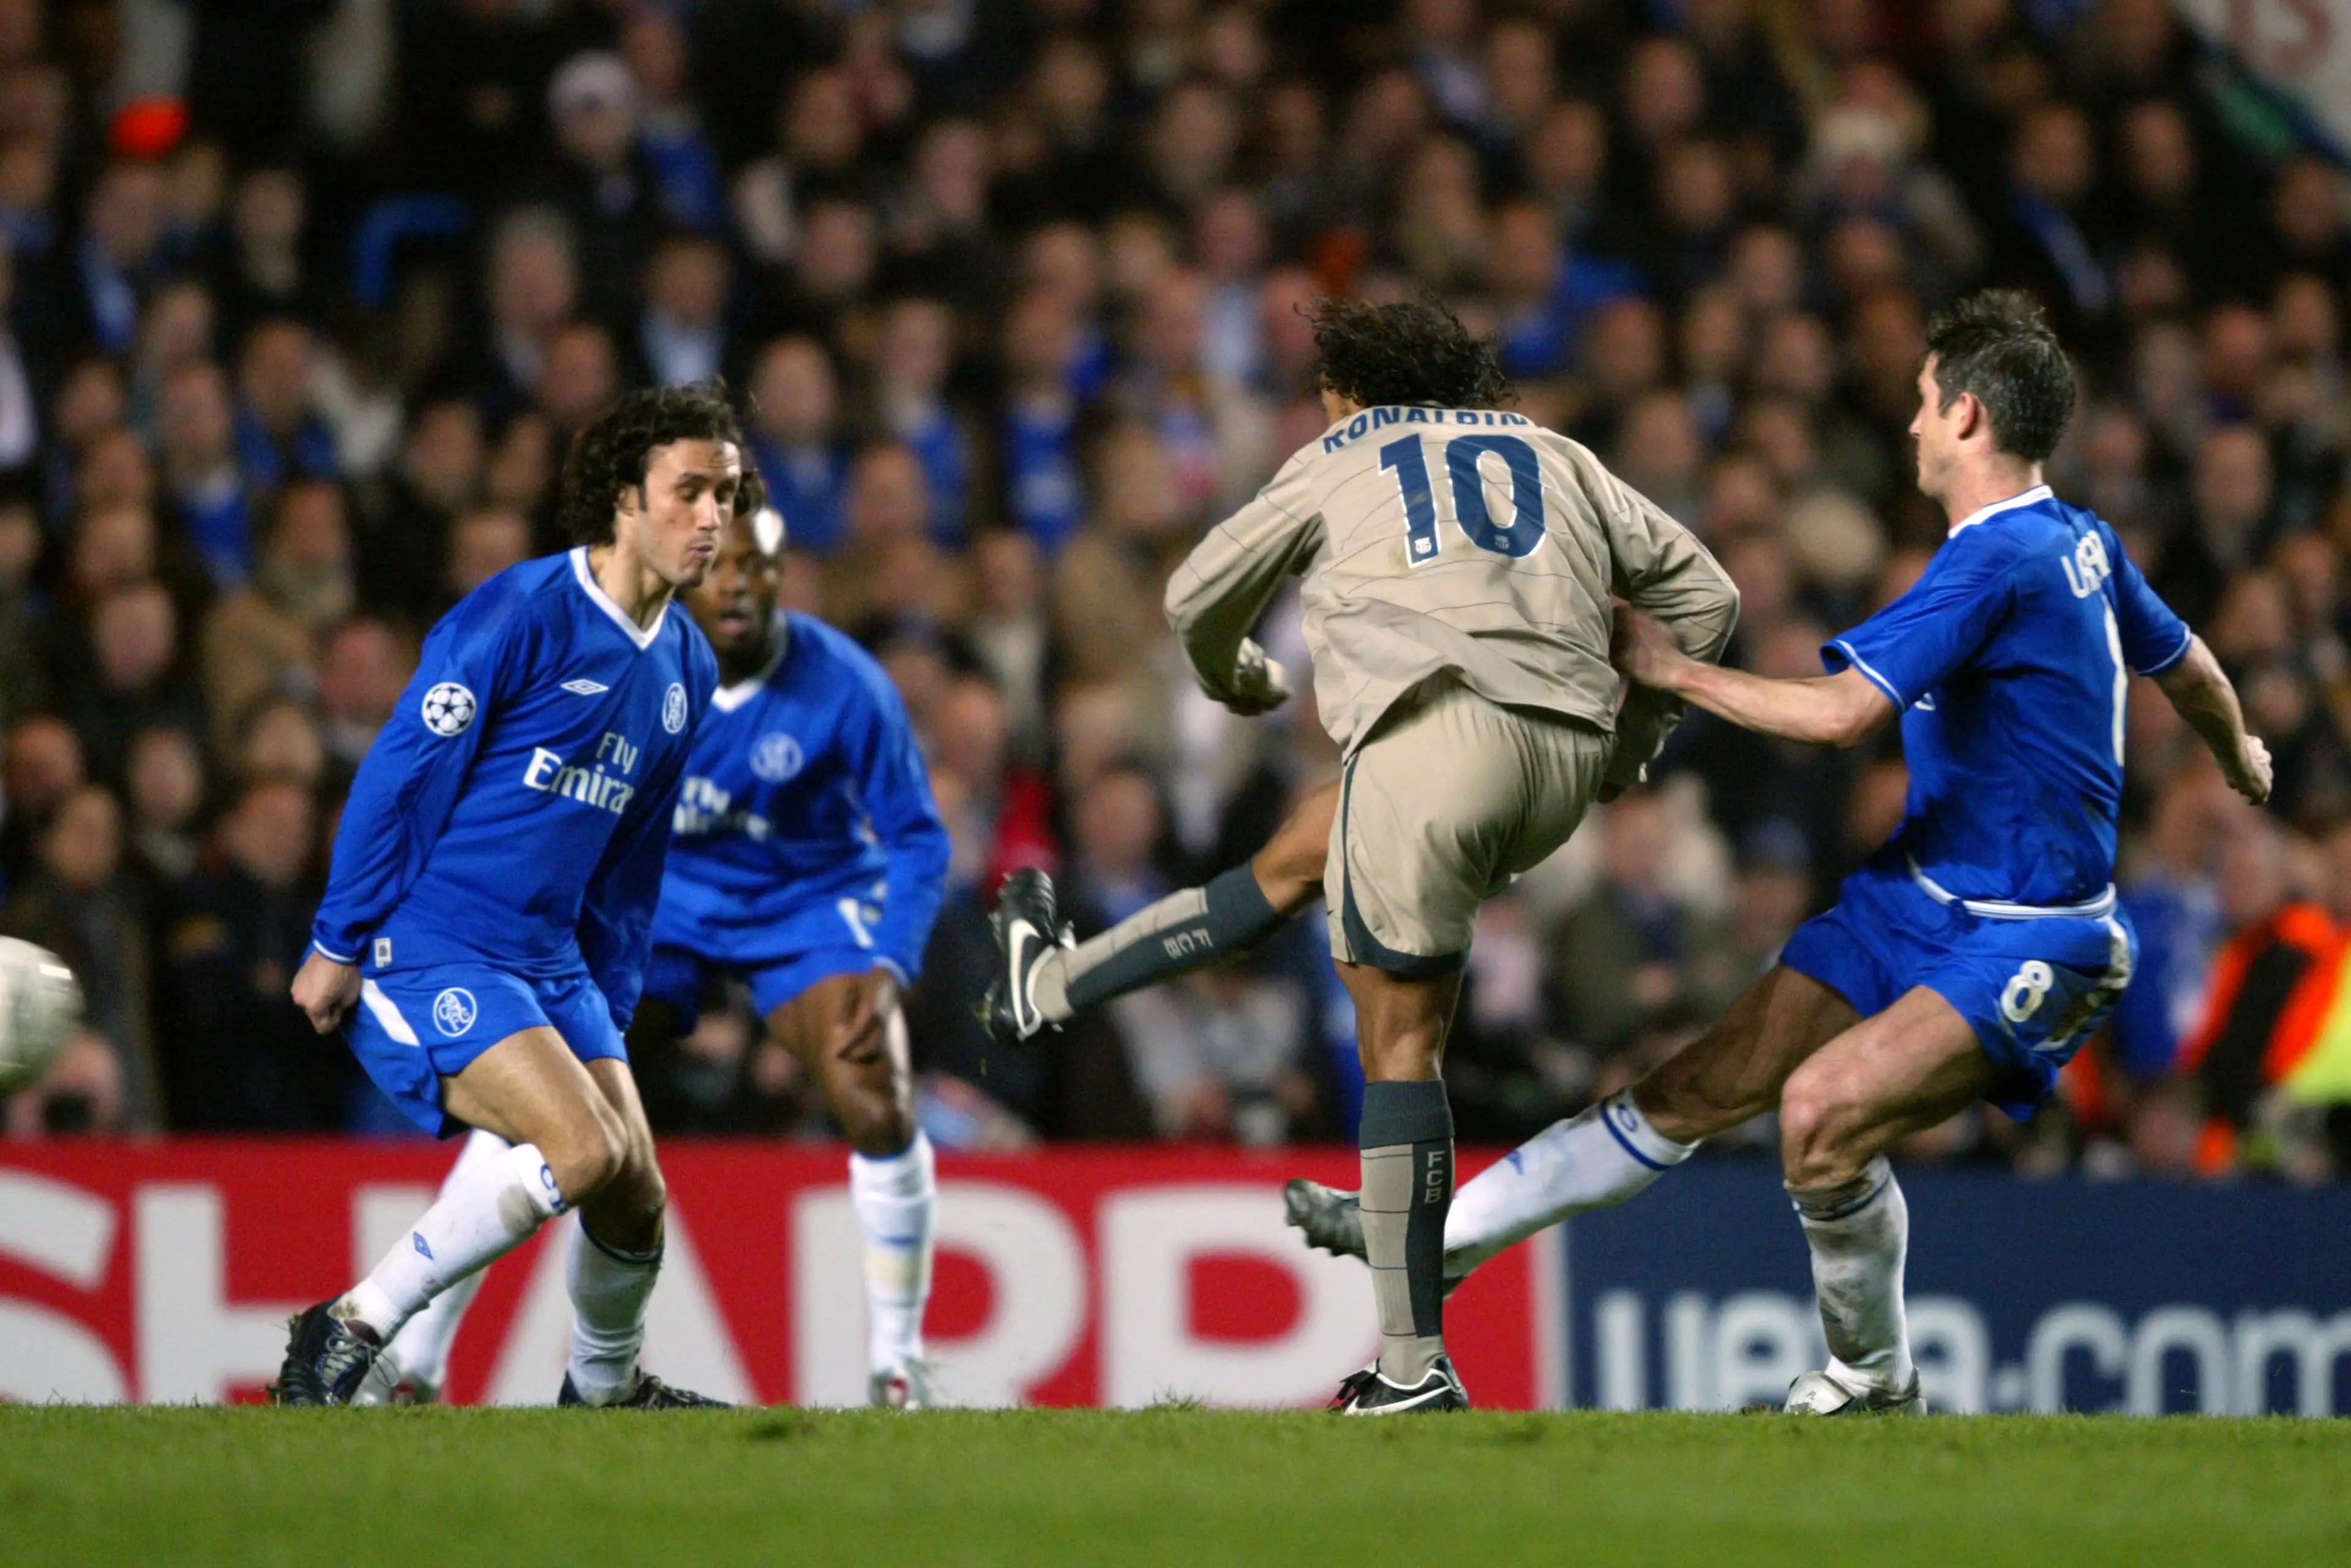 Ronaldinho's amazing finish against Chelsea in the Champions League left Stamford Bridge stunned in 2005